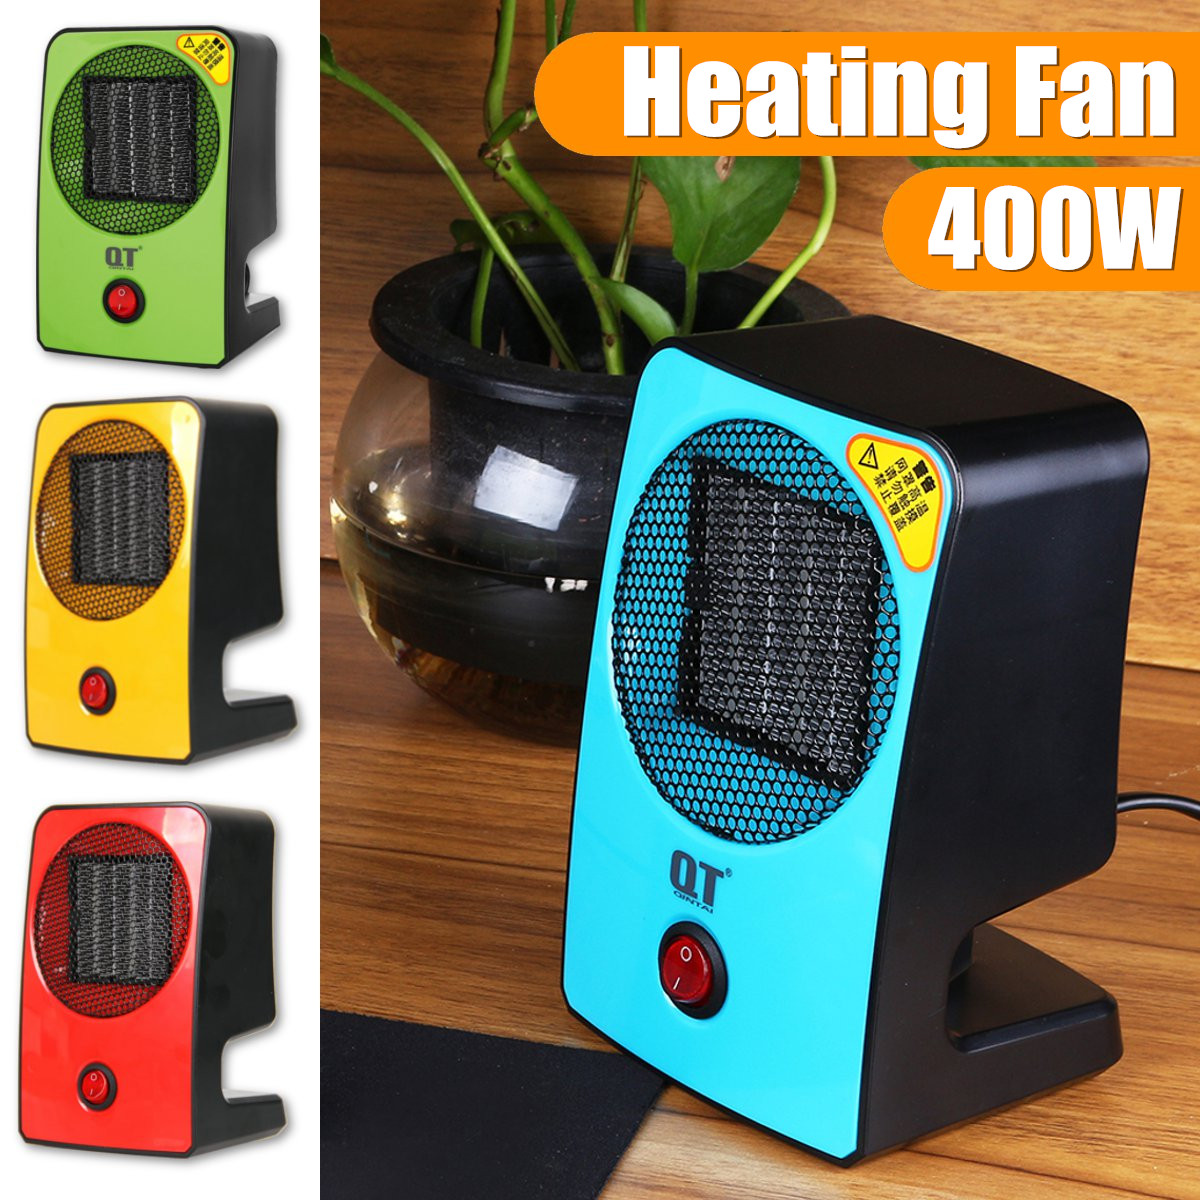 400W-Portable-Air-Heater-Fan-Electric-Home-Bathroom-Warmer-Winter-Heating-Machine-1388862-1